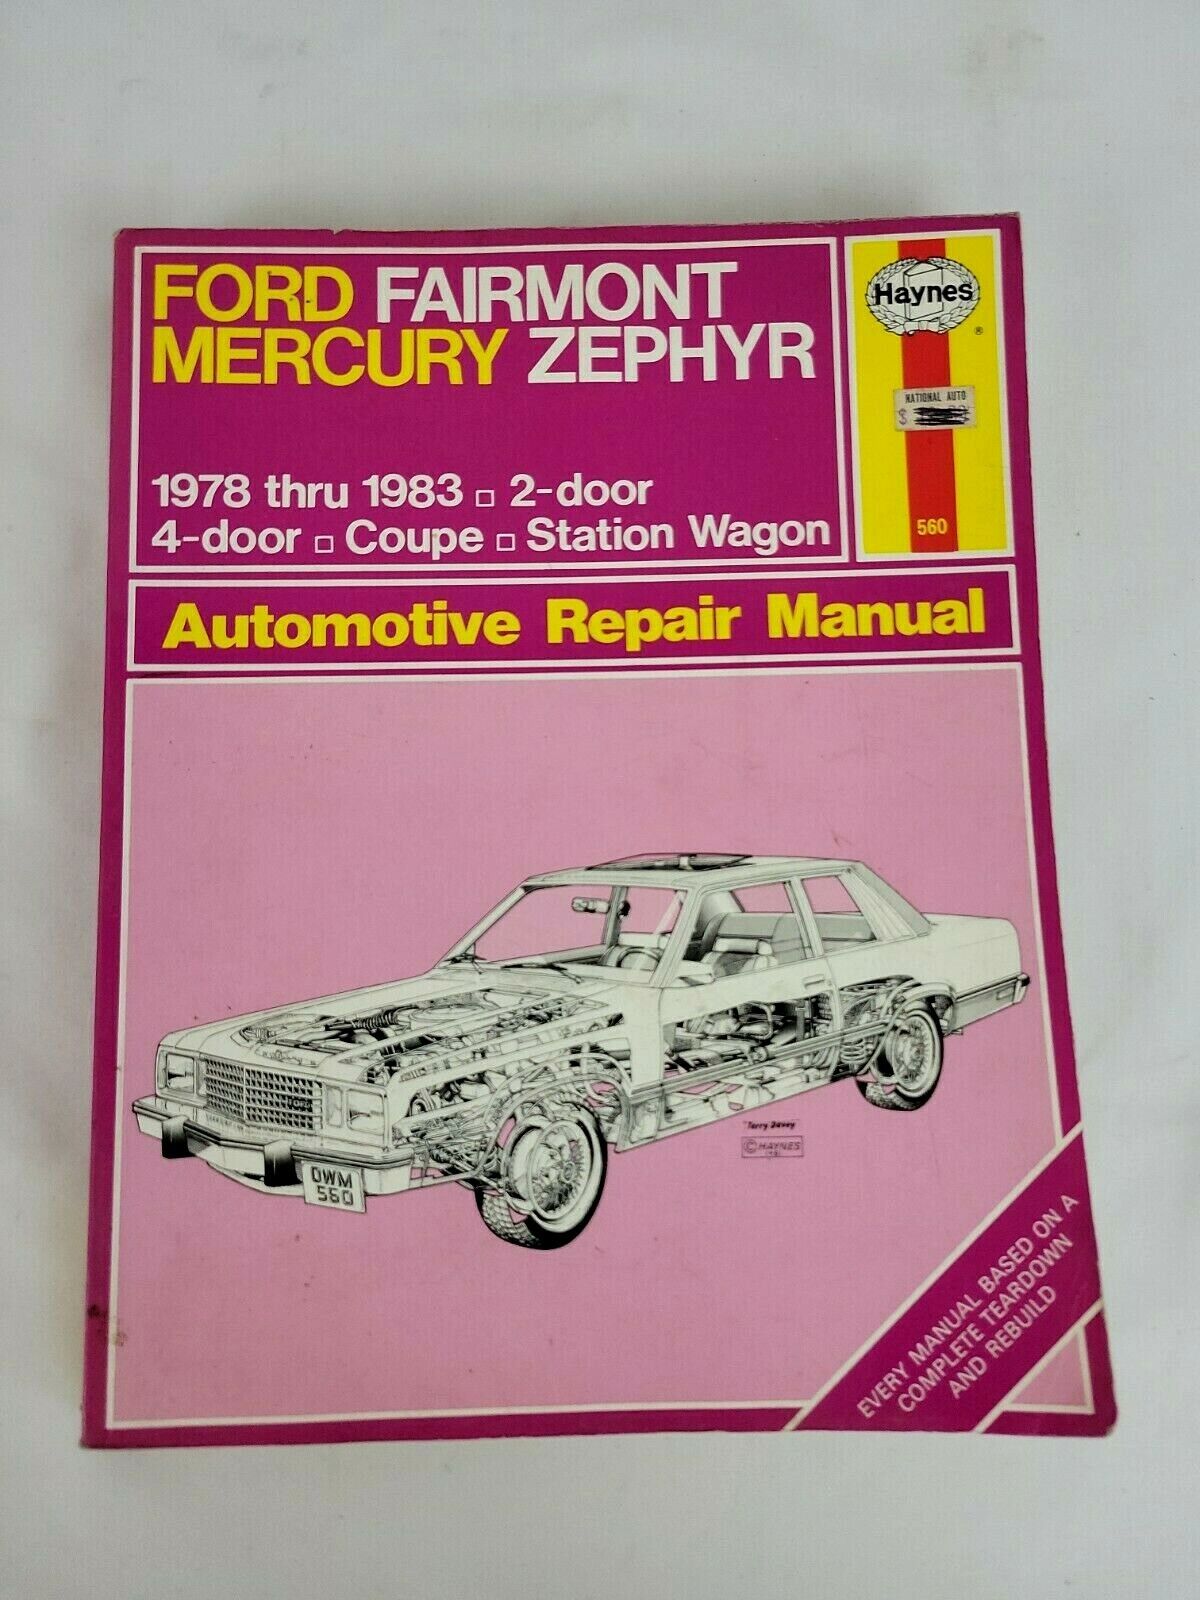 Haynes Ford Fairmont Mercury Zephyr 1978-1983 Automotive Repair Manual Book